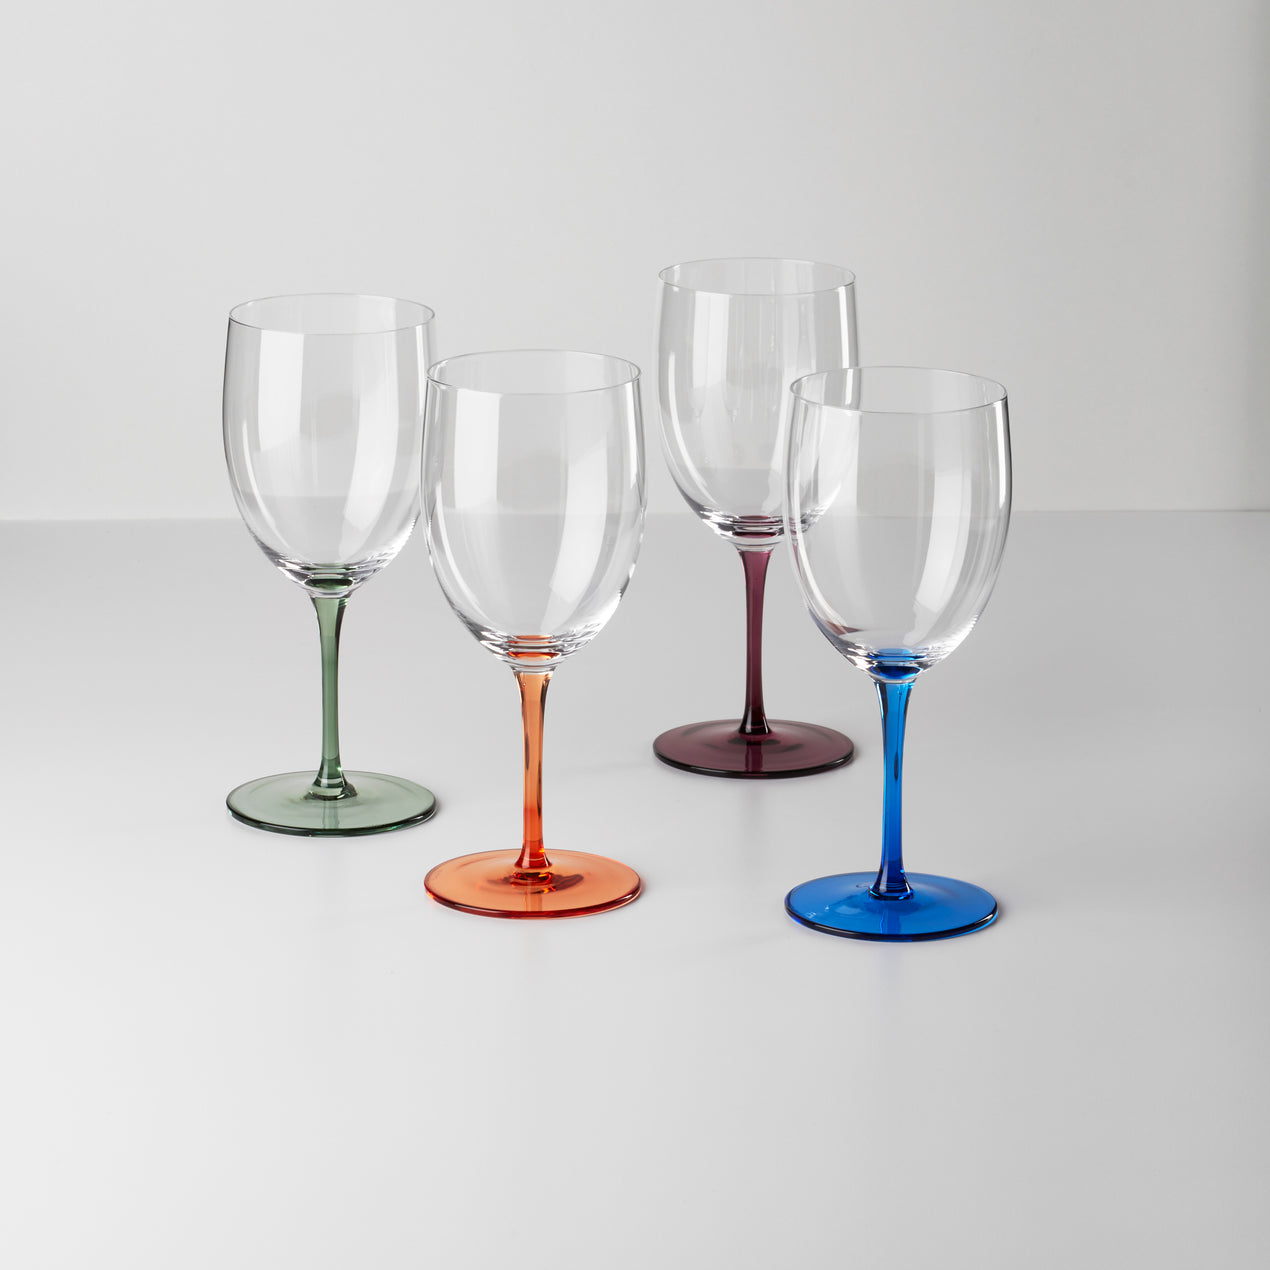 Oneida Bottoms Up Wine Glasses, Set of 4